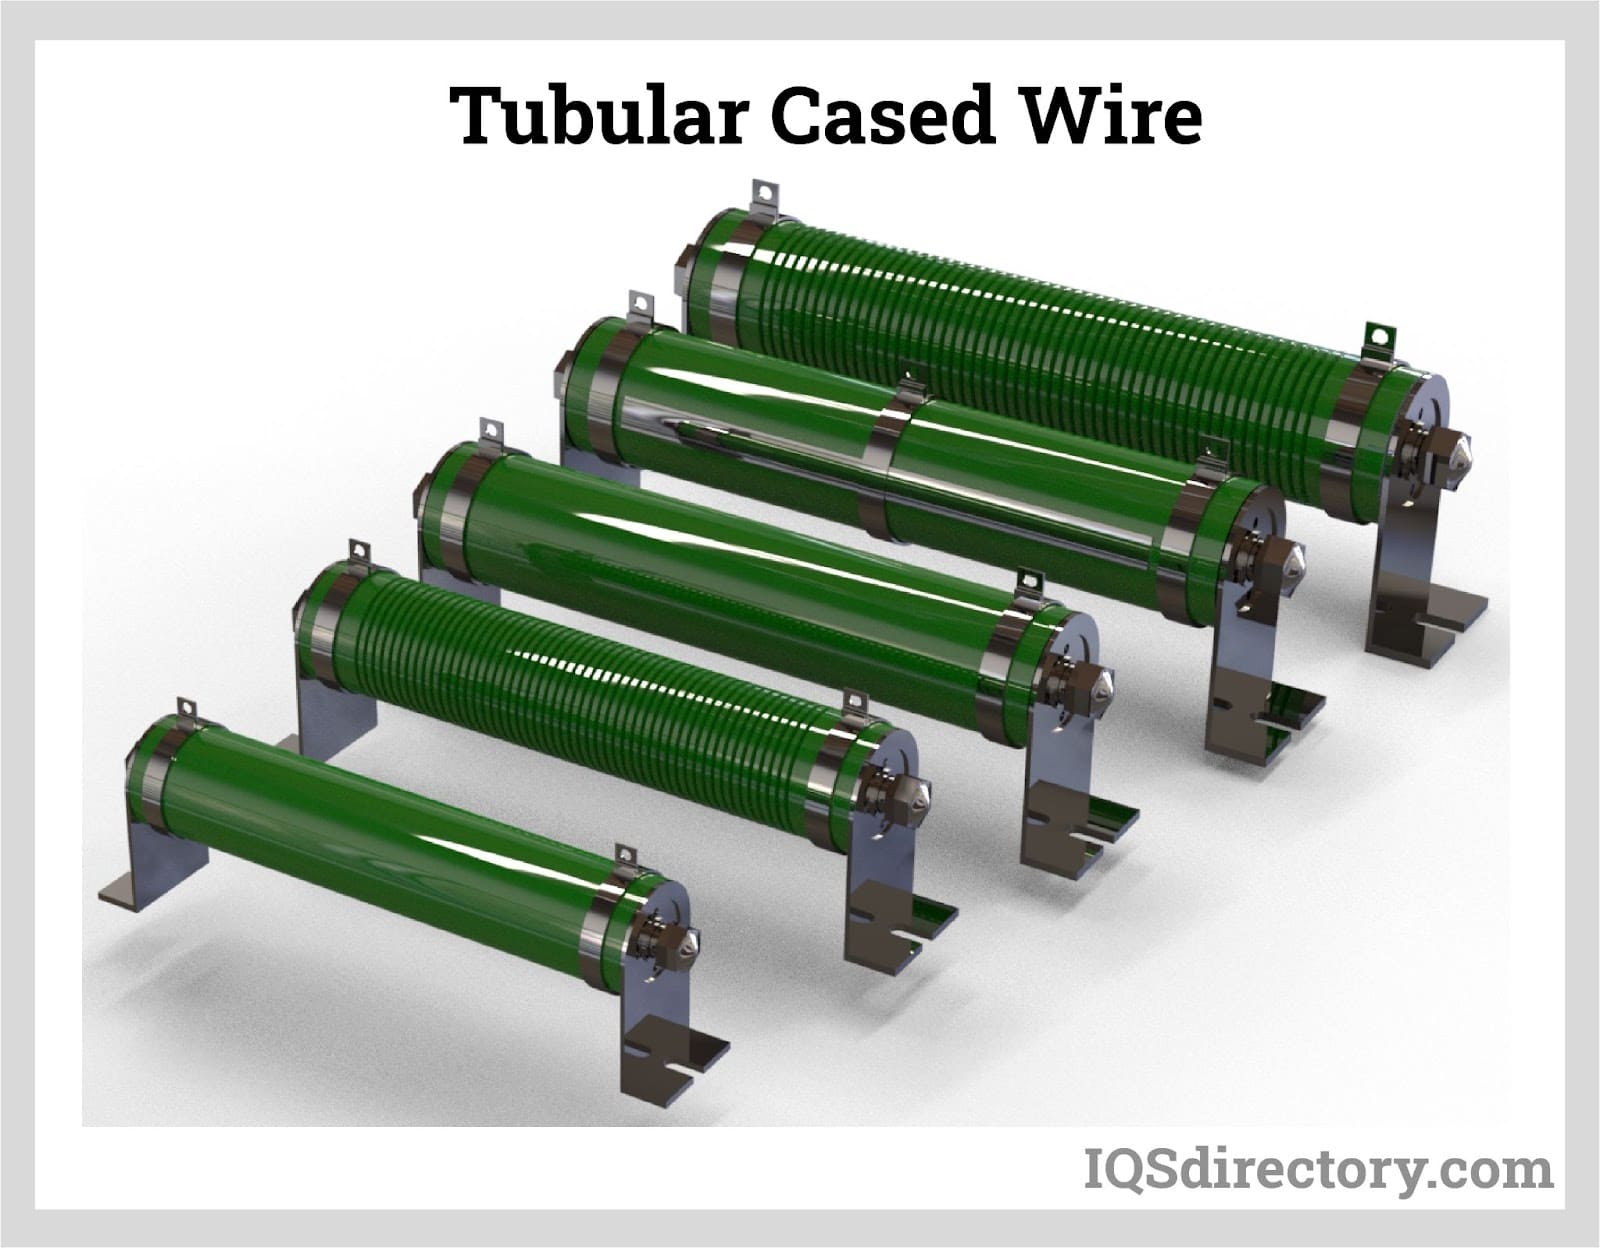 Tubular Cased Wire